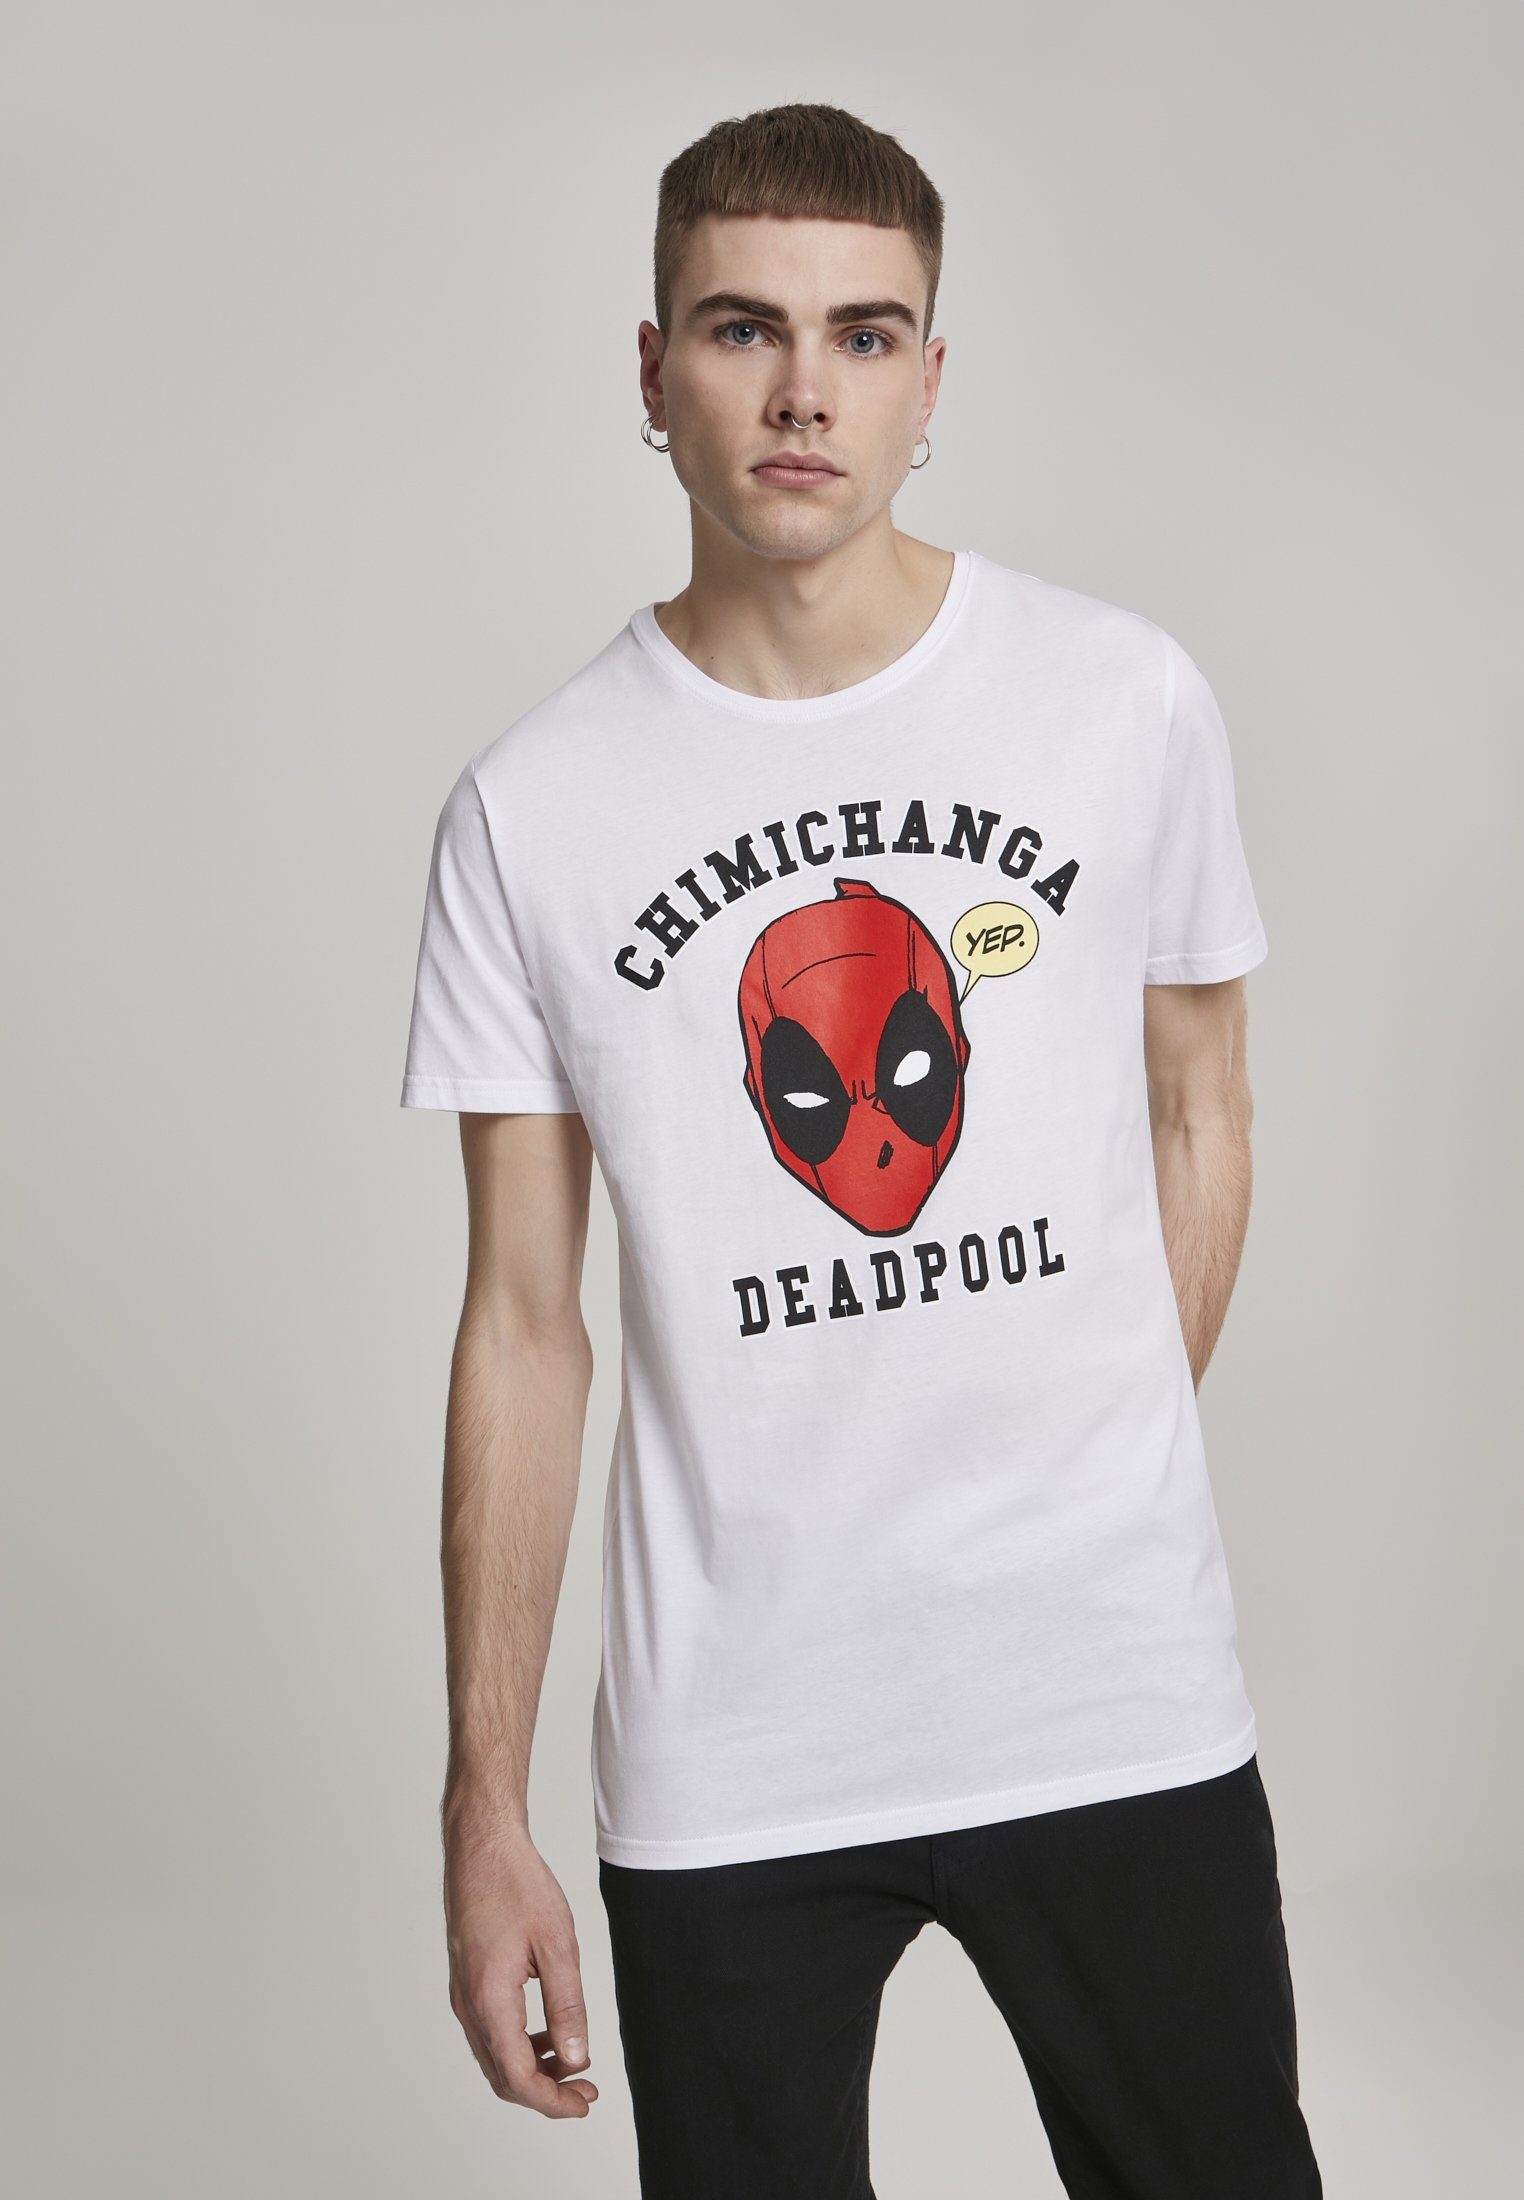 T-Shirt Herren Tee (1-tlg) Deadpool Merchcode Chimichanga